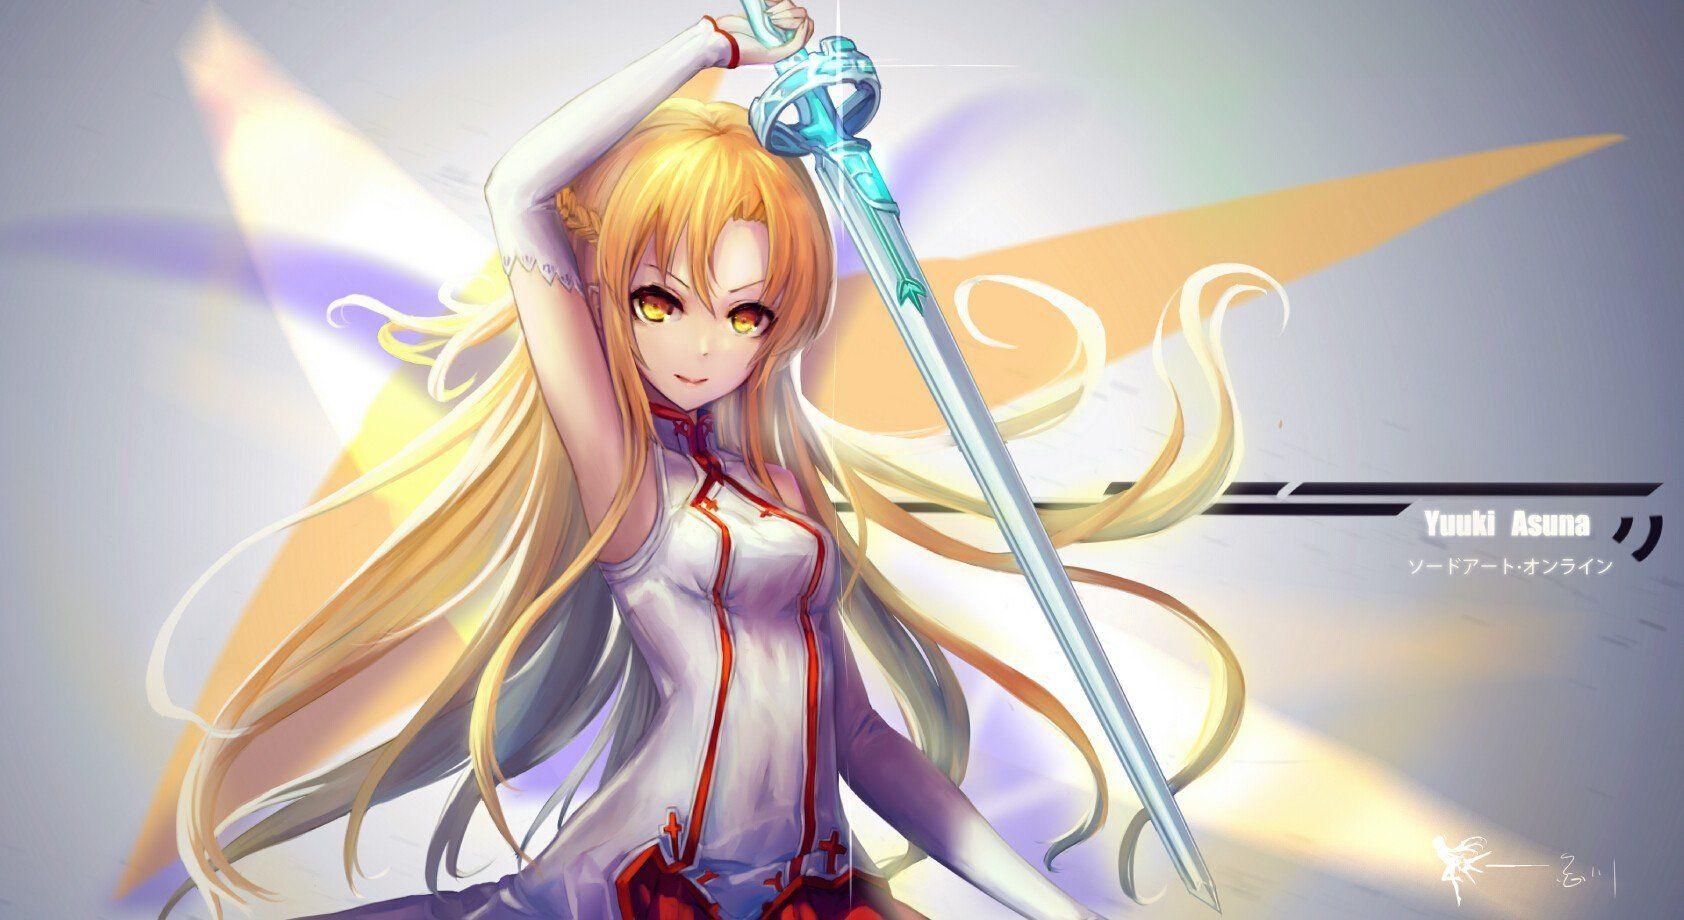 sword art online yuuki asuna wallpaper and background